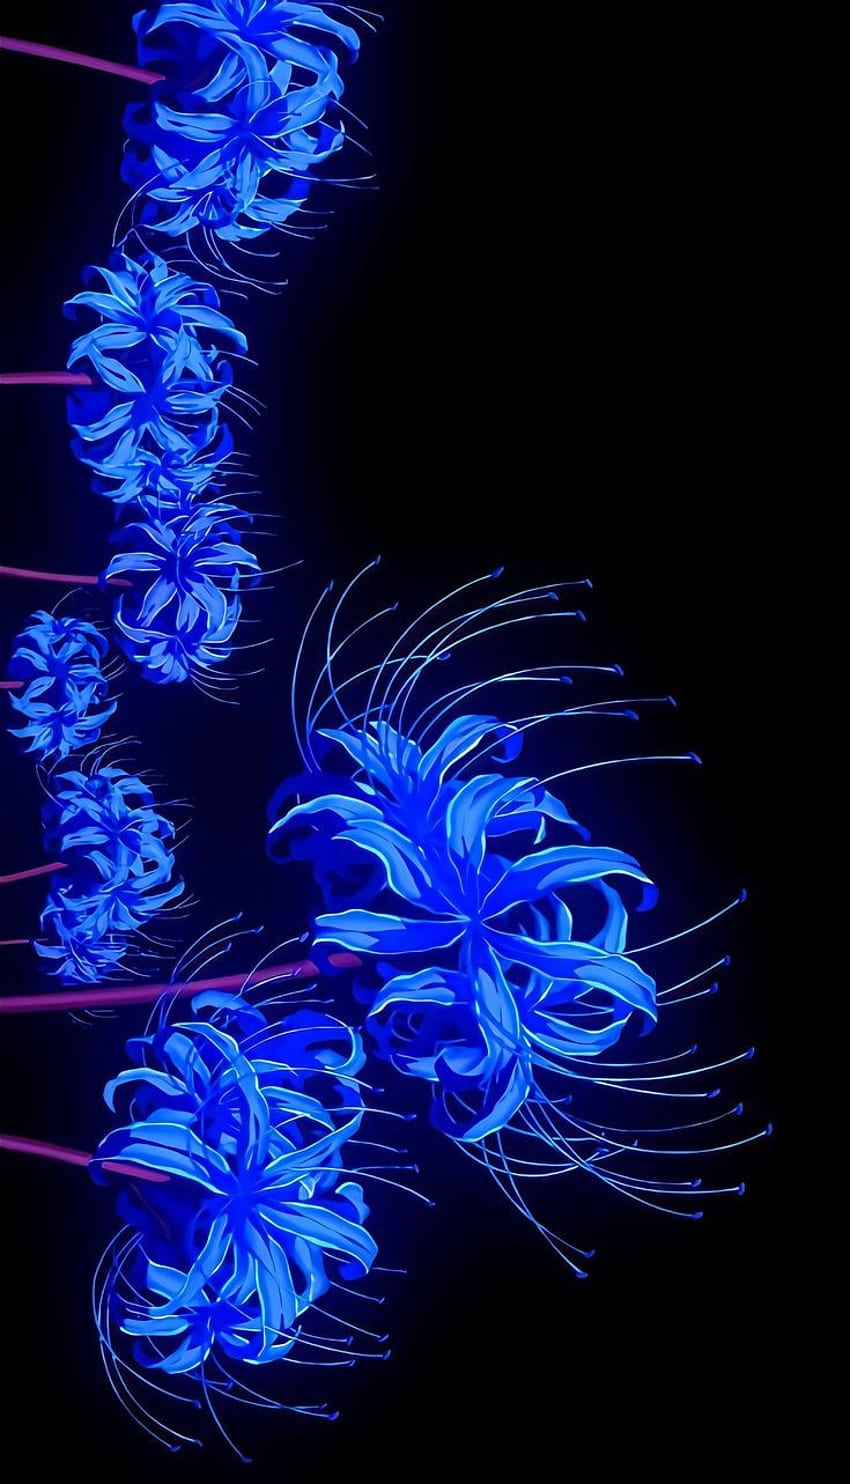 Lily laba-laba biru, tidak, pembunuh, yaiba, setan, anime wallpaper ponsel HD